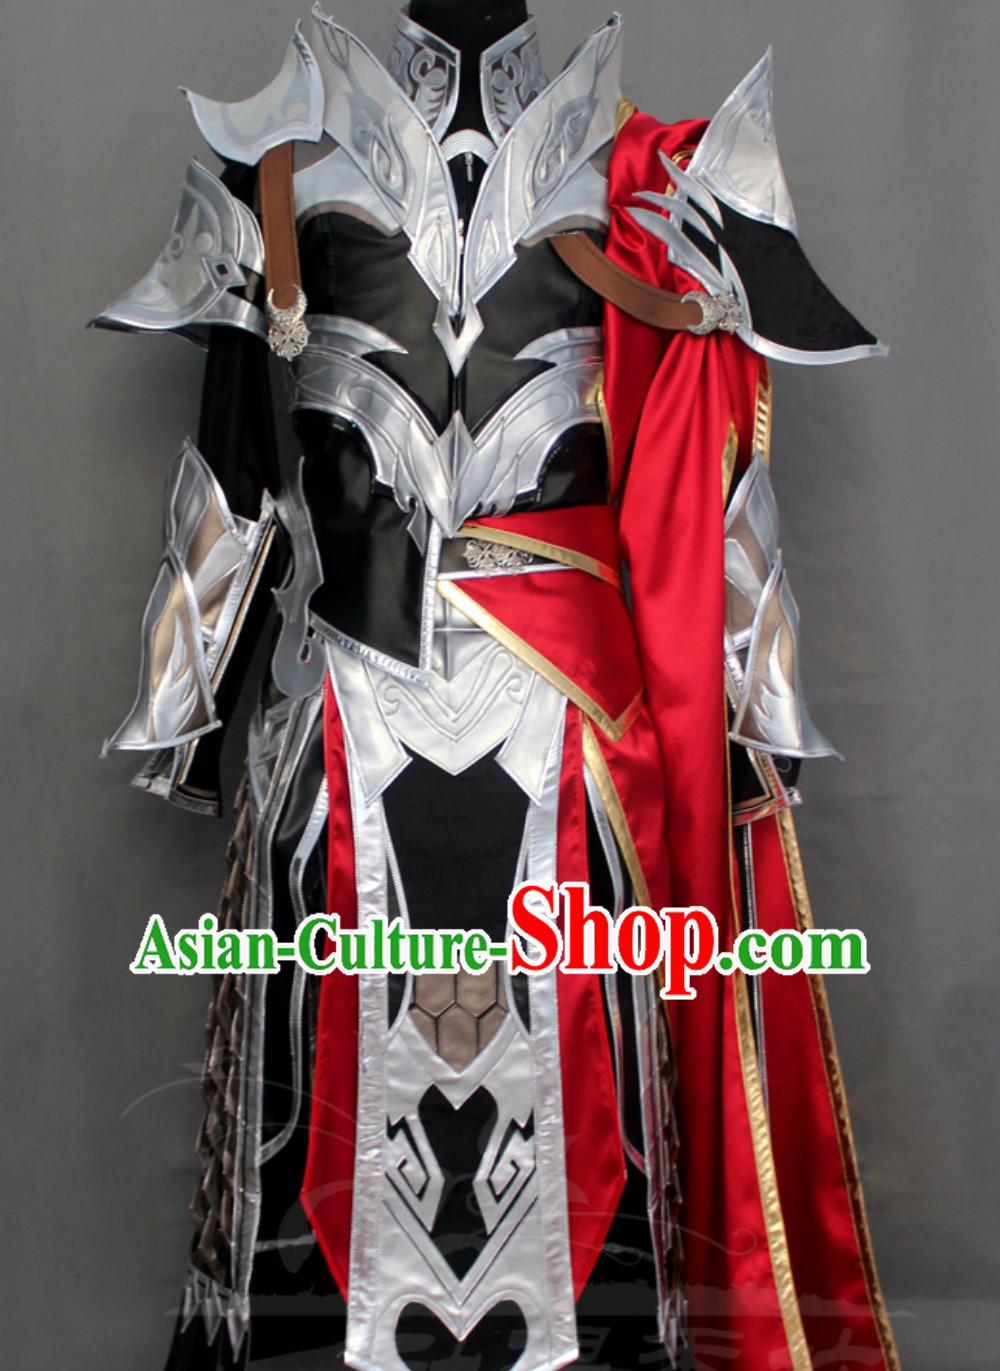 Superhero Armor Style Costumes Complete Set for Men